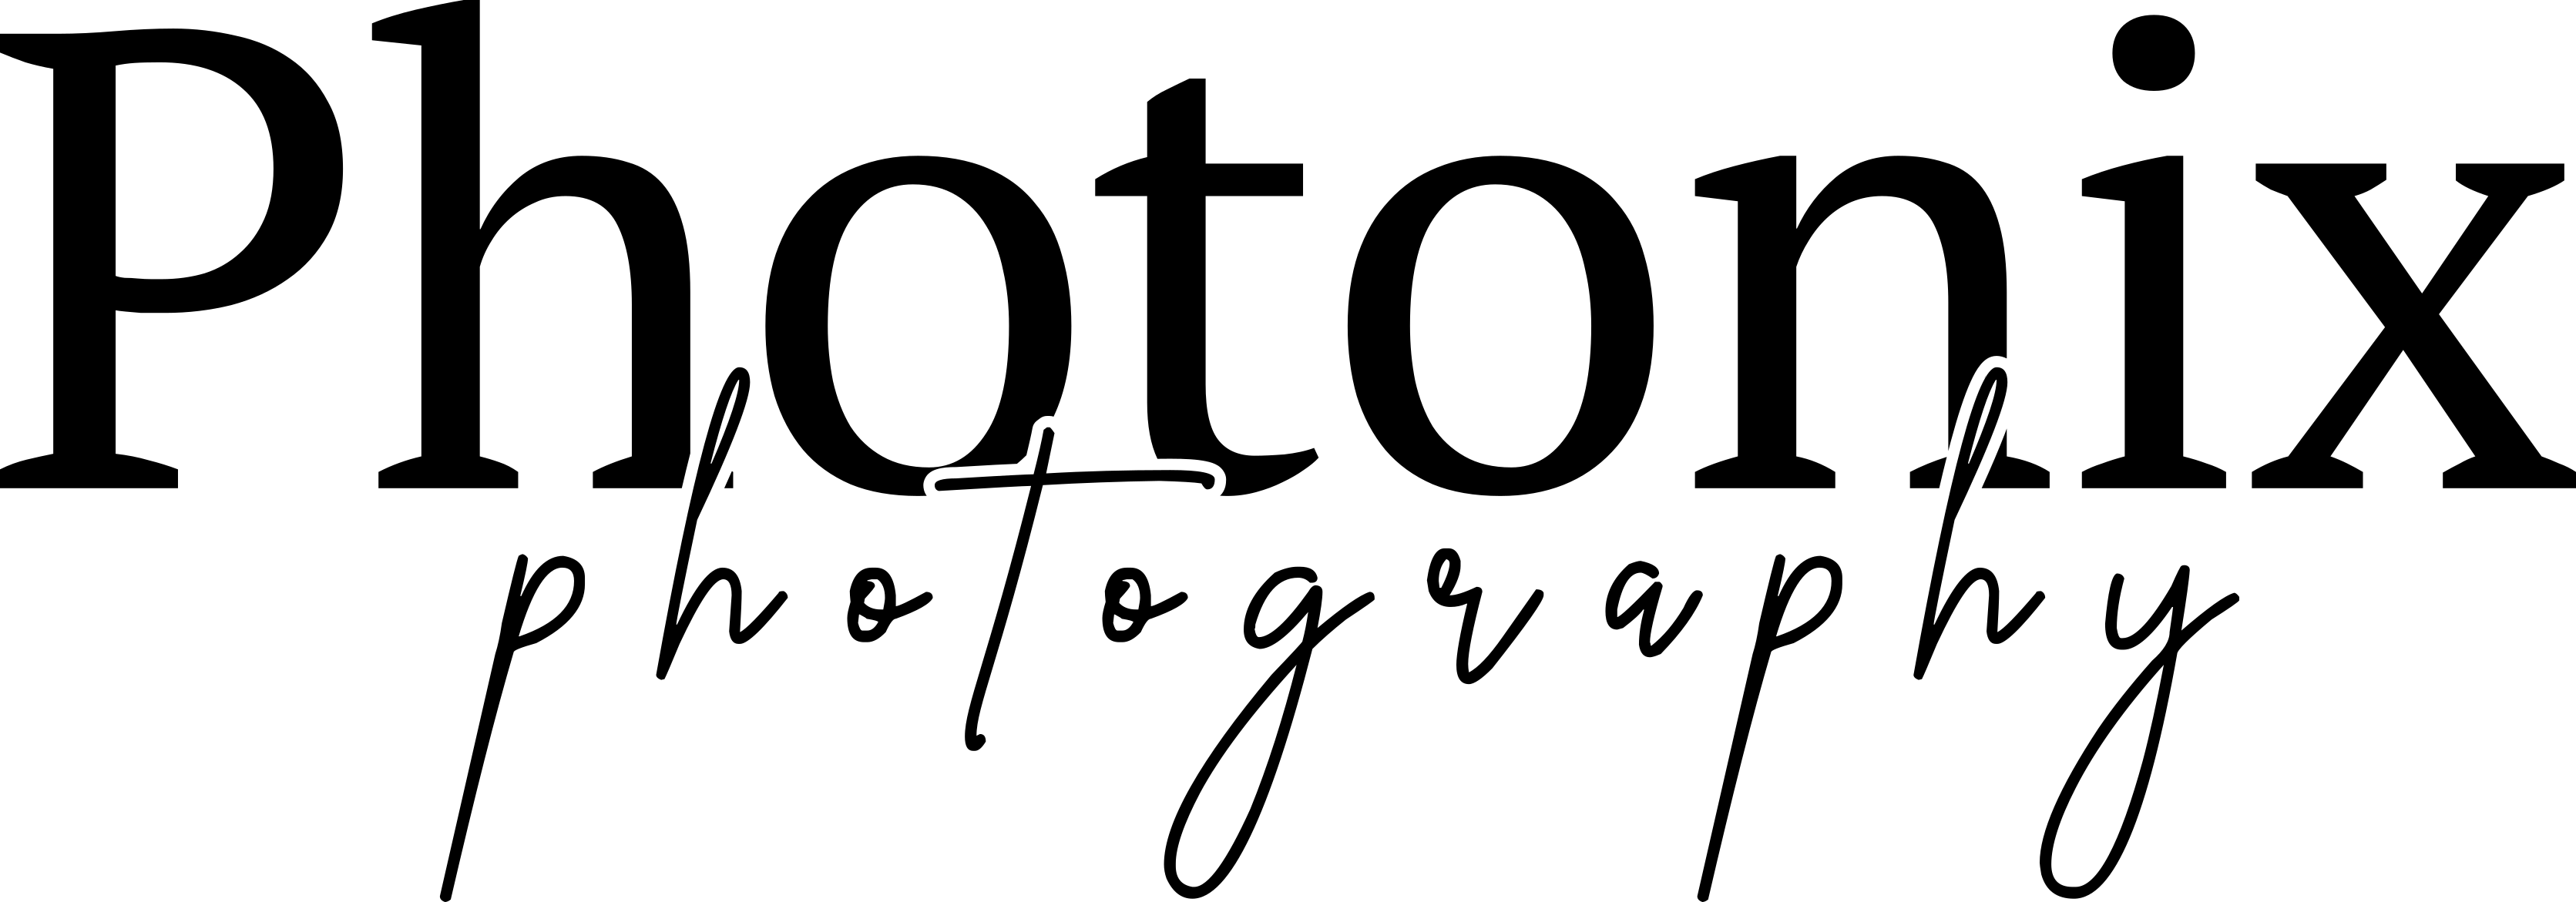 Photonix Brand Logo